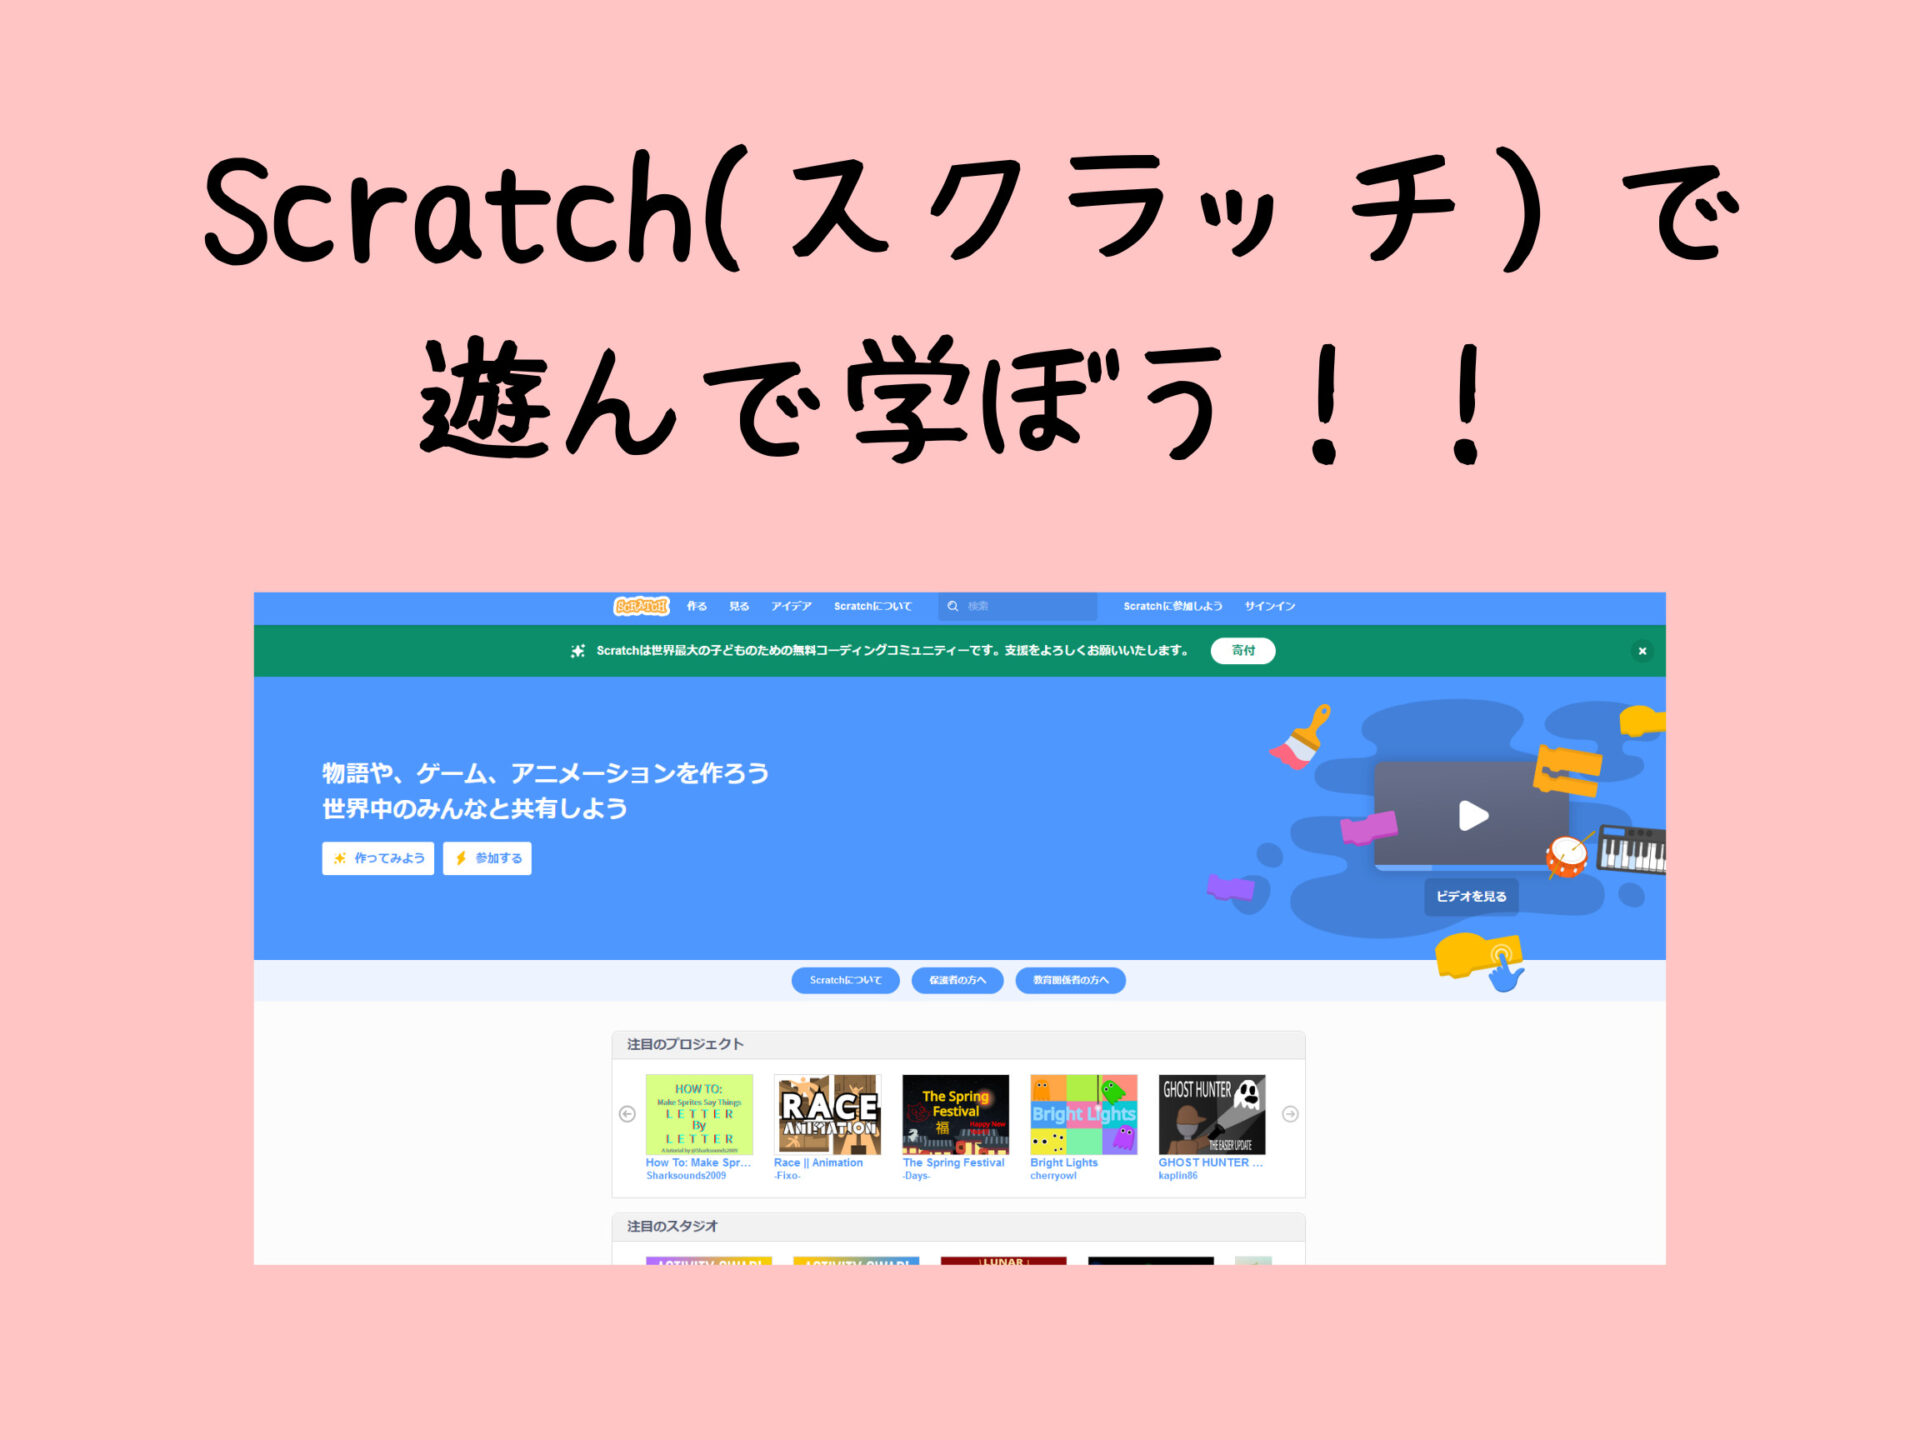 - Scratch（スクラッチ）でゲーム/アニメーションを作ること、プログラミングを学ぶことについて。